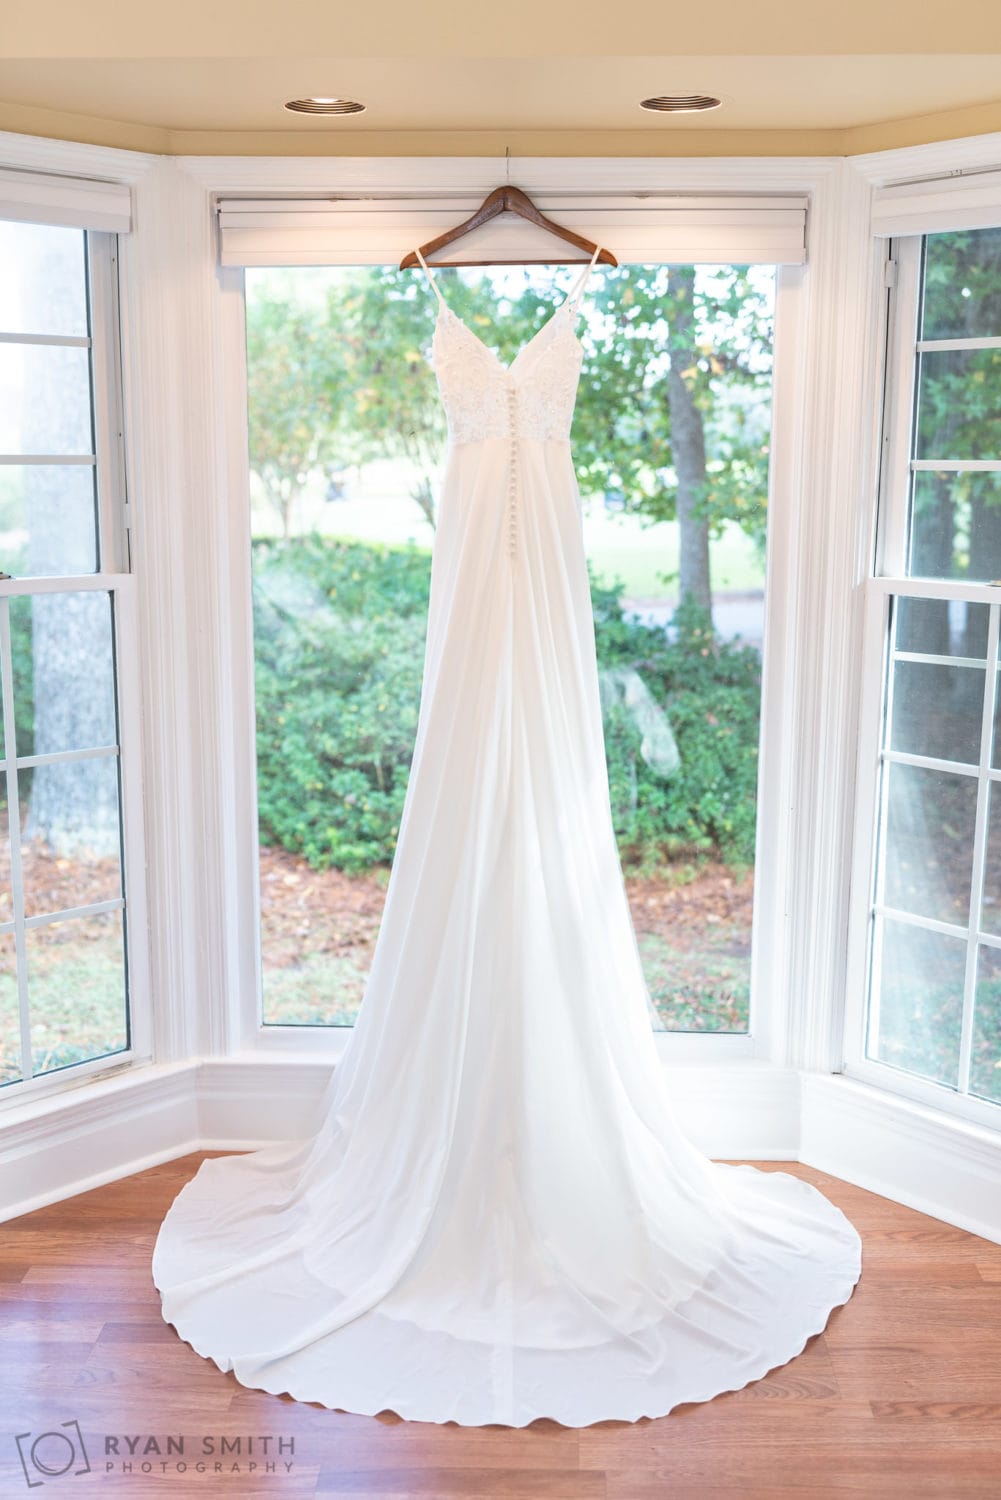 Wedding dress handing in the window - Wachesaw Plantation